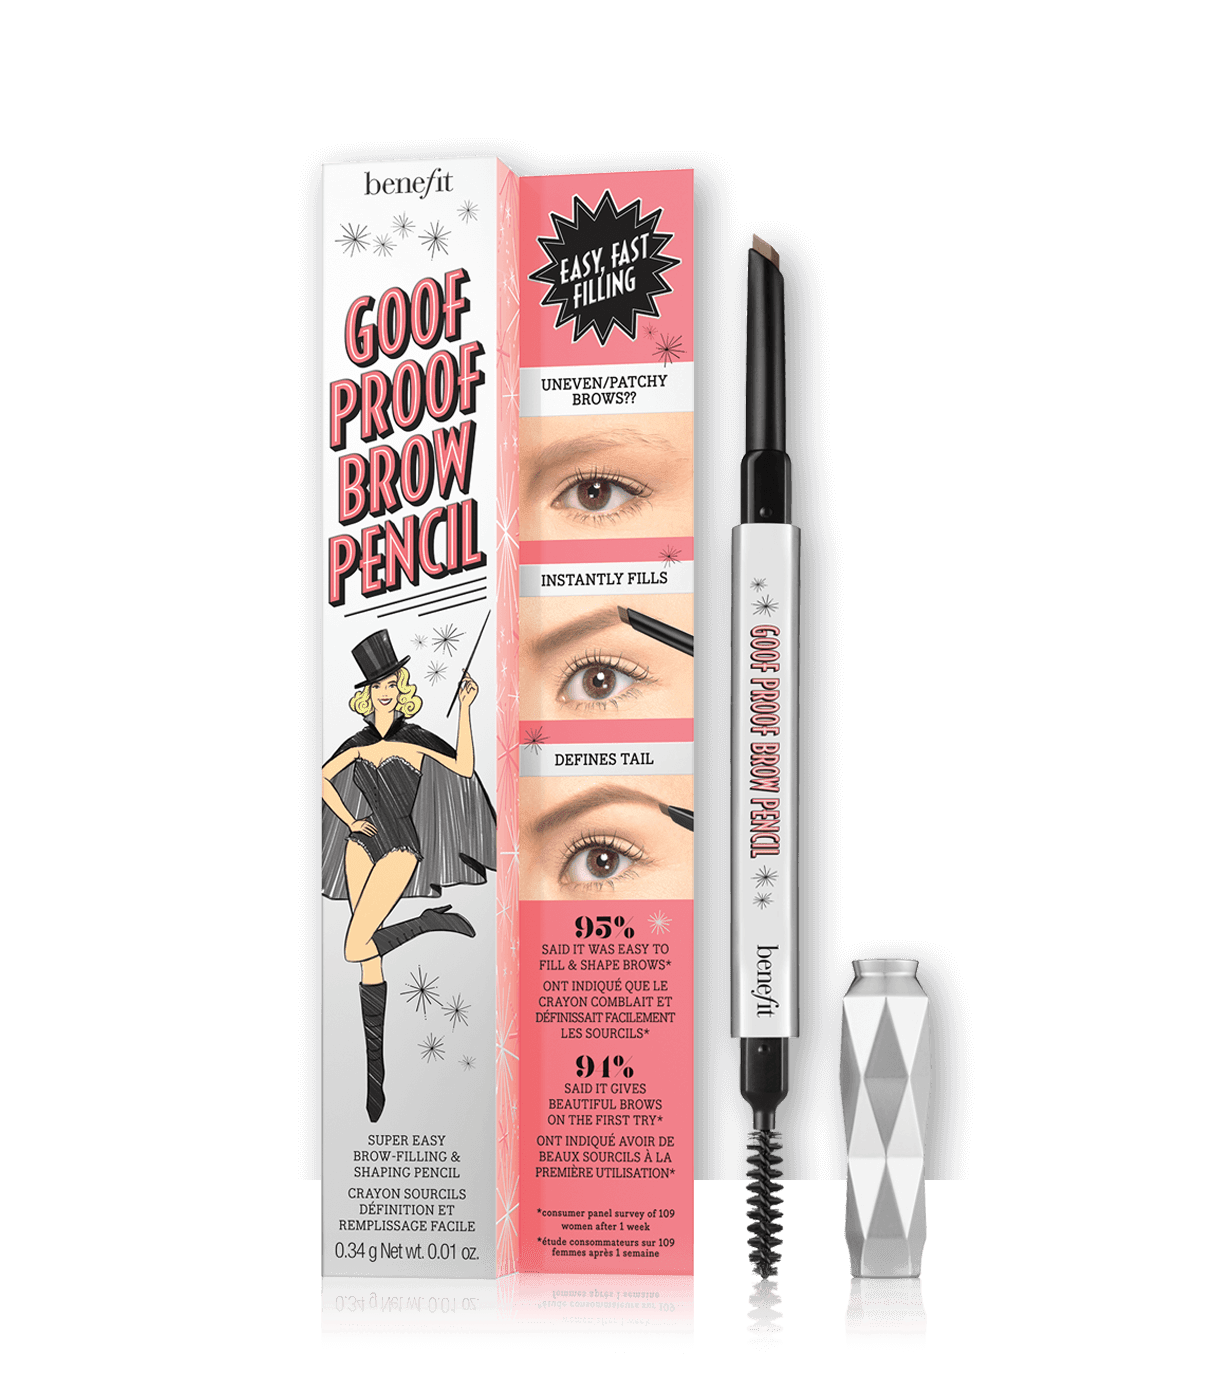 Benefit Goof Proof brow pencil